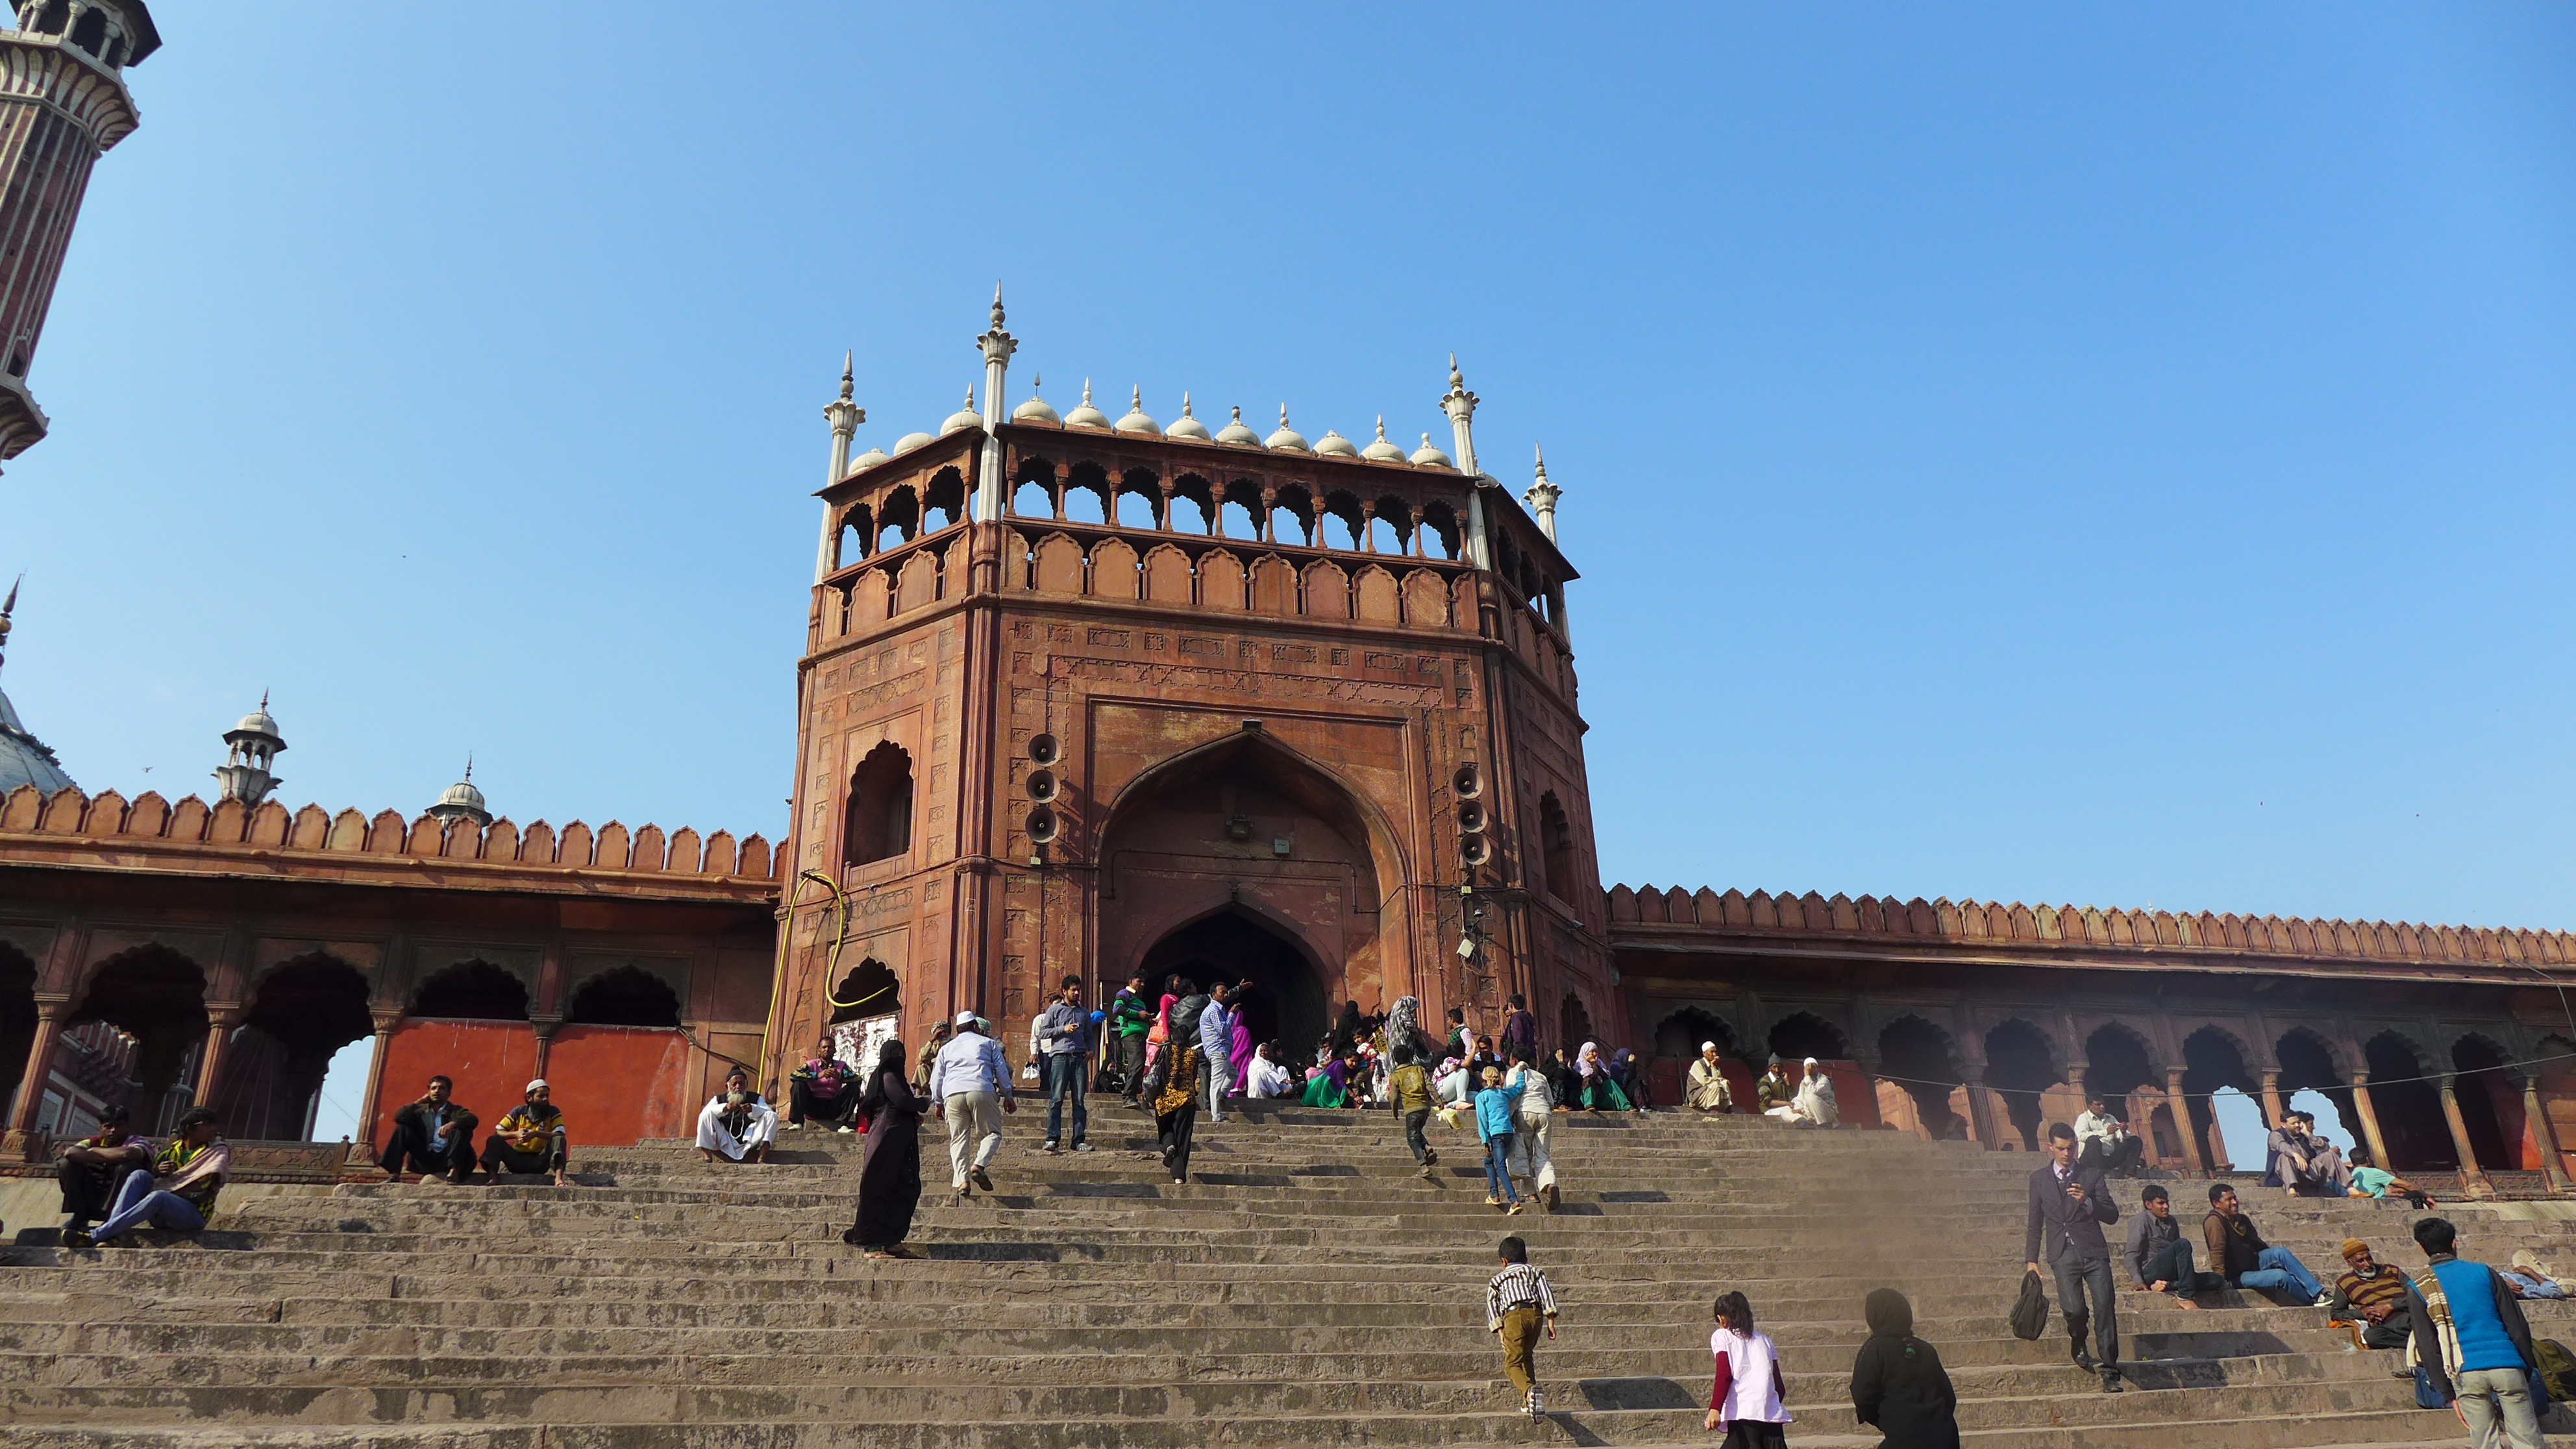 Jama Masjid Entrance Gate